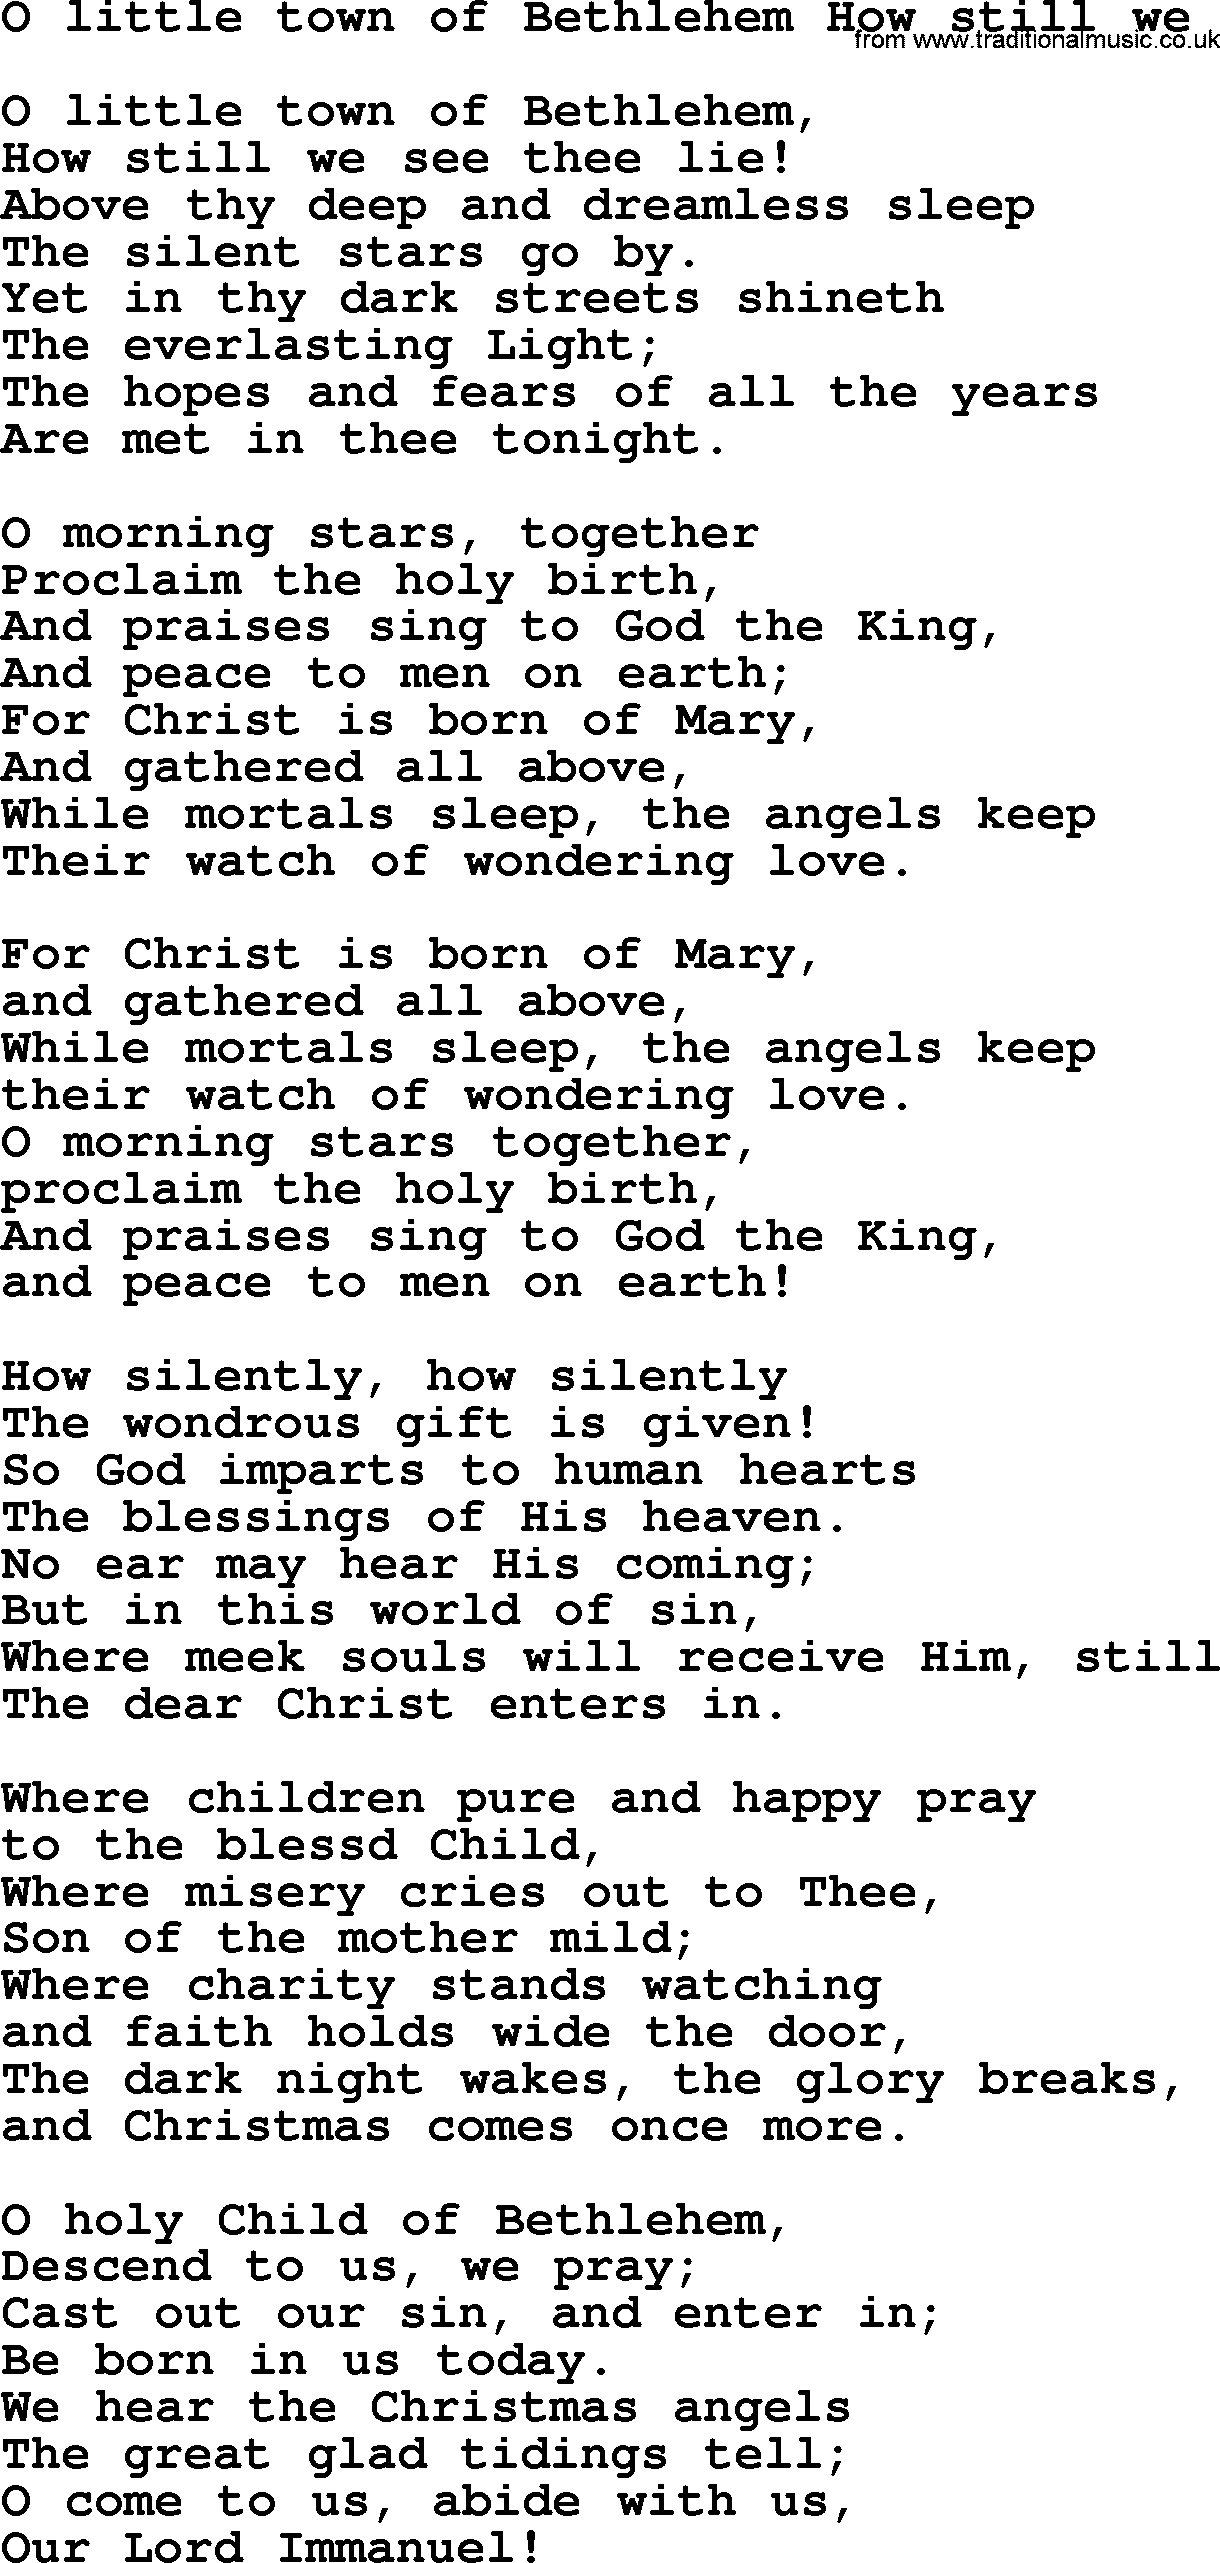 Presbyterian Hymns collection, Hymn: O Little Town Of Bethlehem How Still We, lyrics and PDF